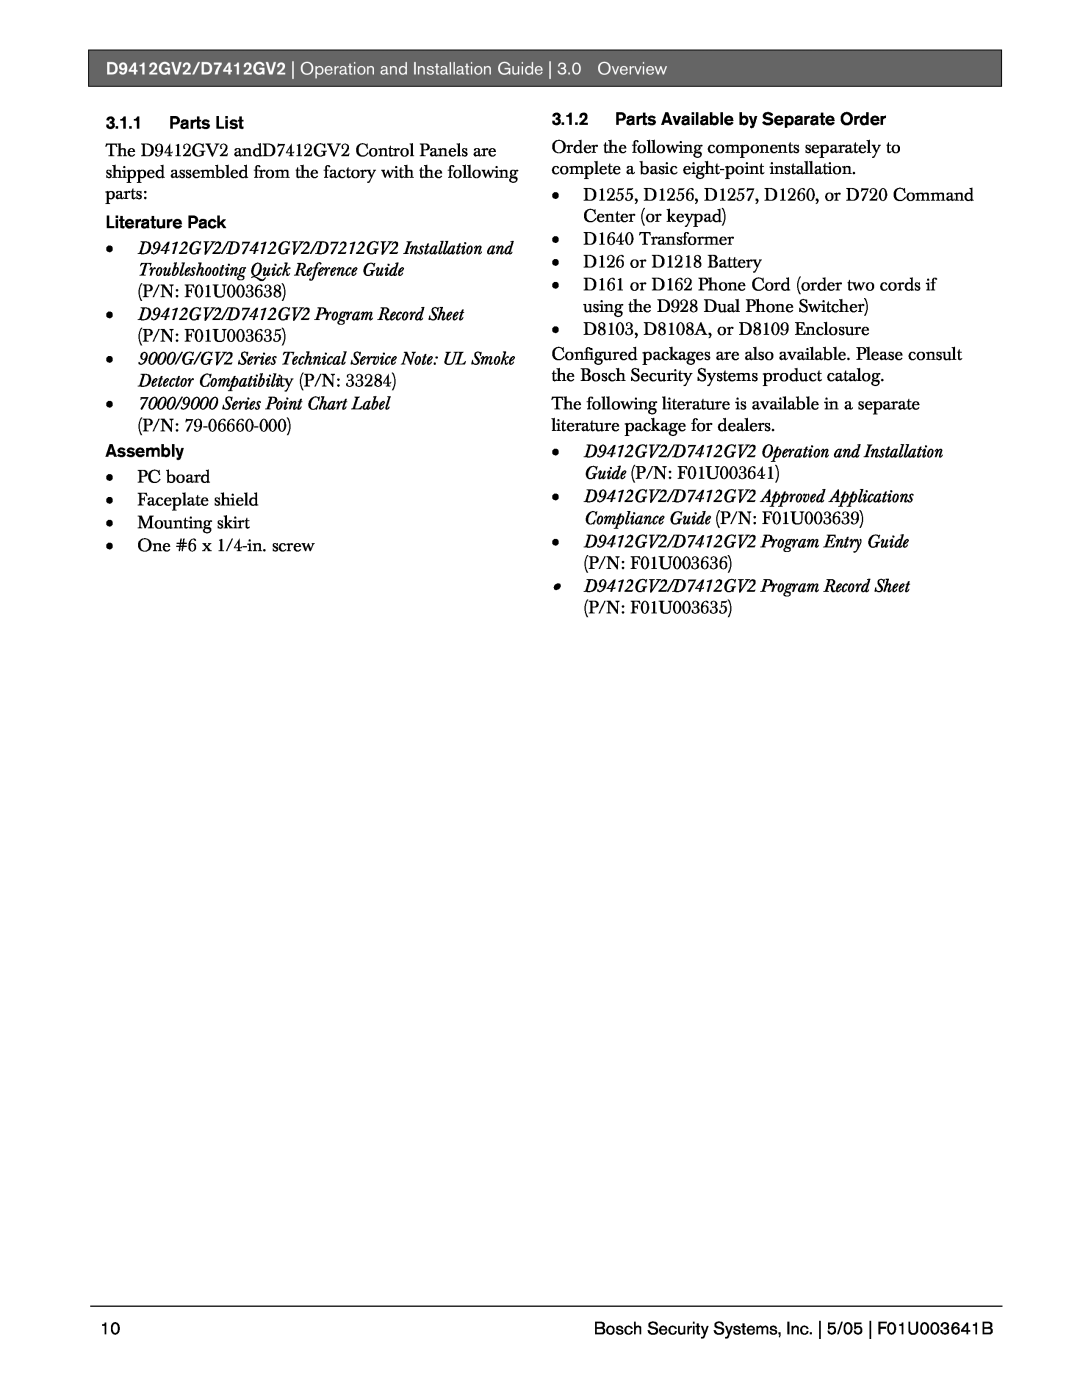 Bosch Appliances D9412GV2 manual 3.1.1Parts List, Literature Pack, Detector Compatibility P/N, Assembly 